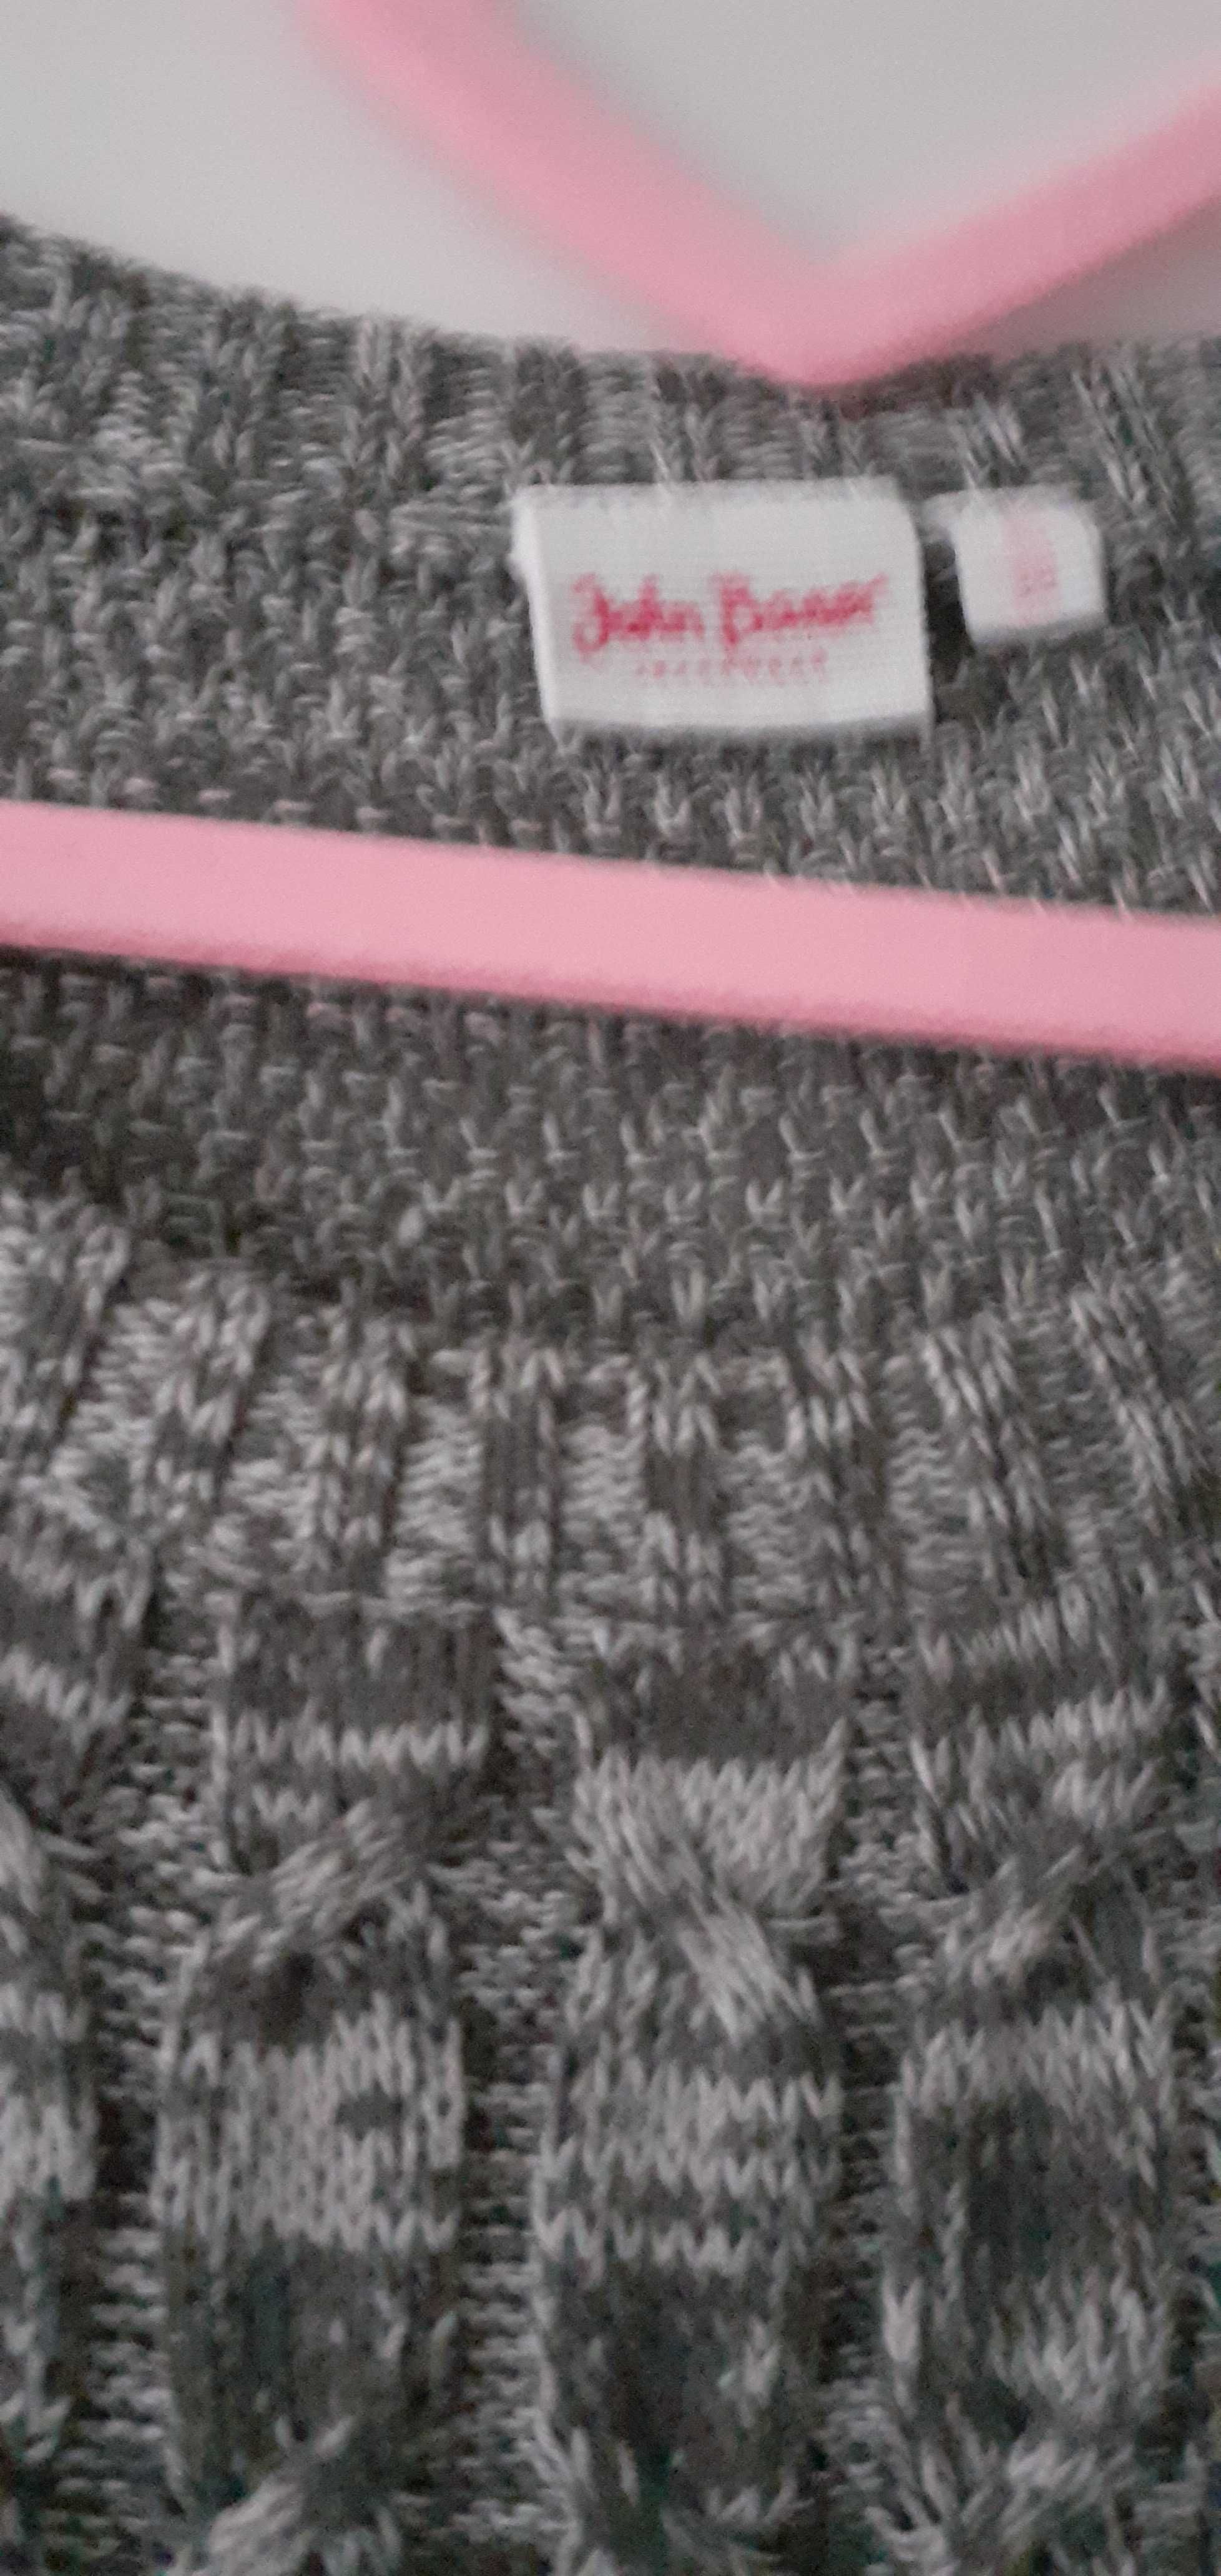 Szary sweter damski roz 38 firmy John Baner